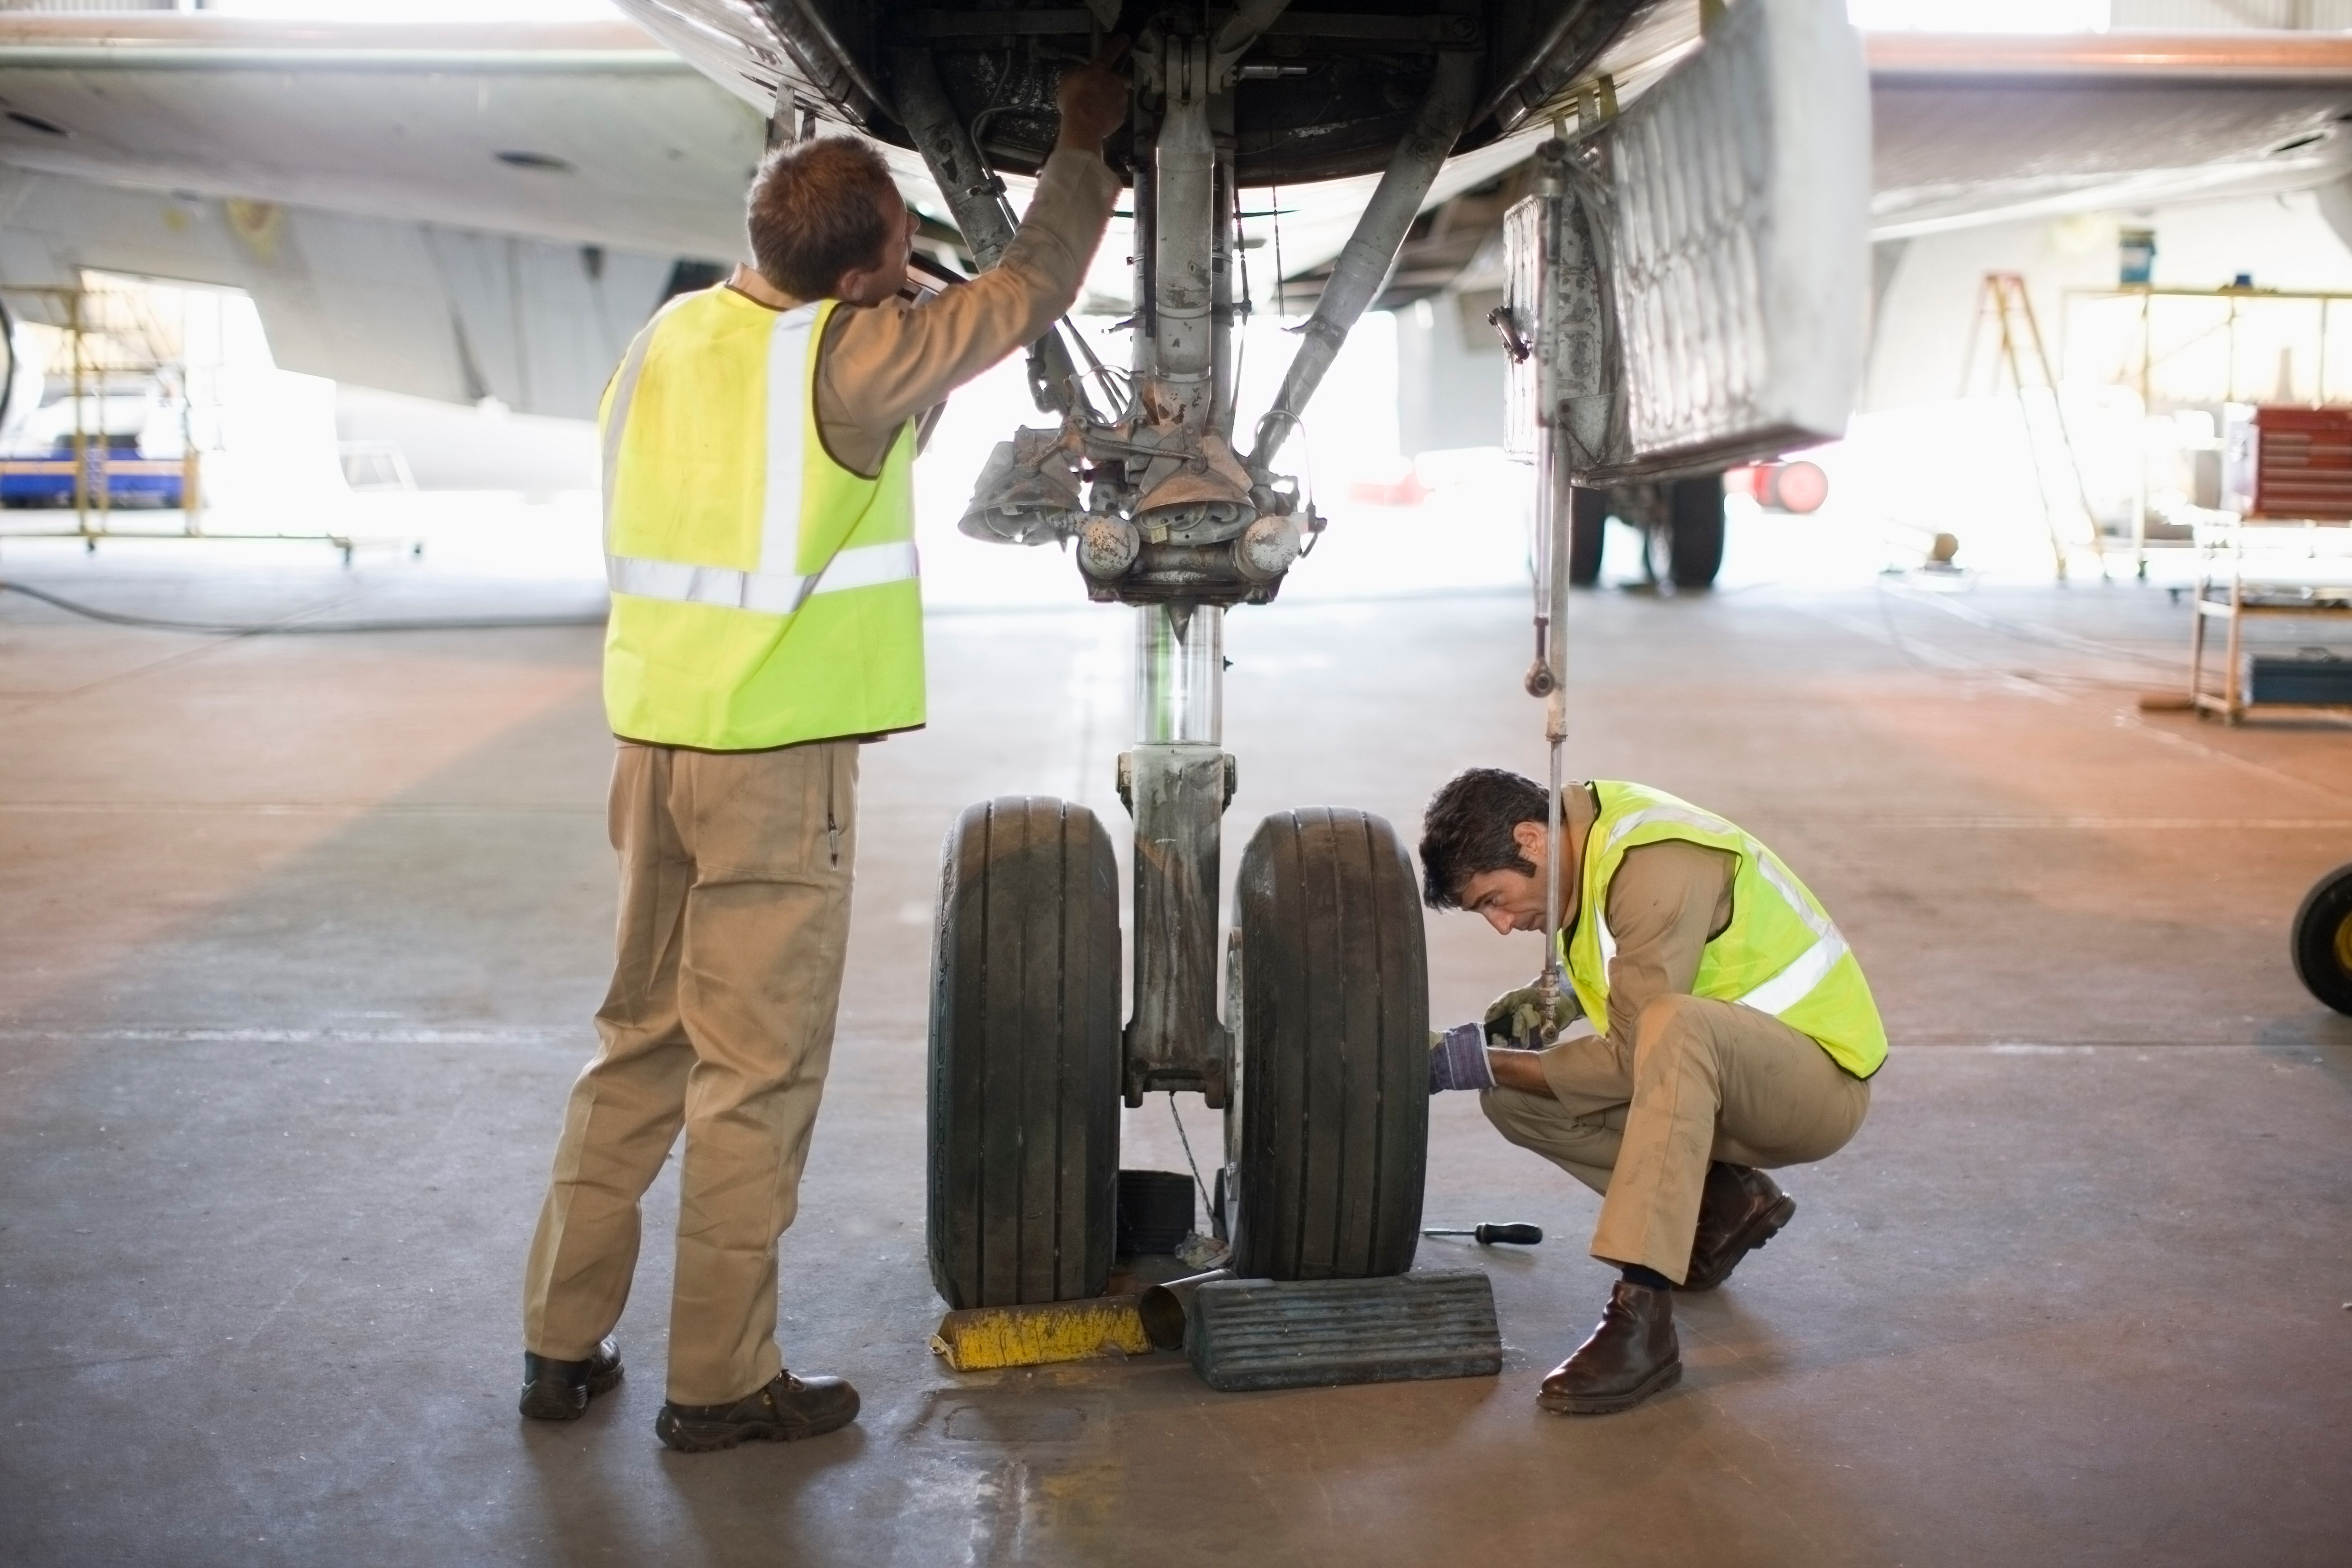 Aircraft workers checking wheels 2023 11 27 05 21 24 utc
